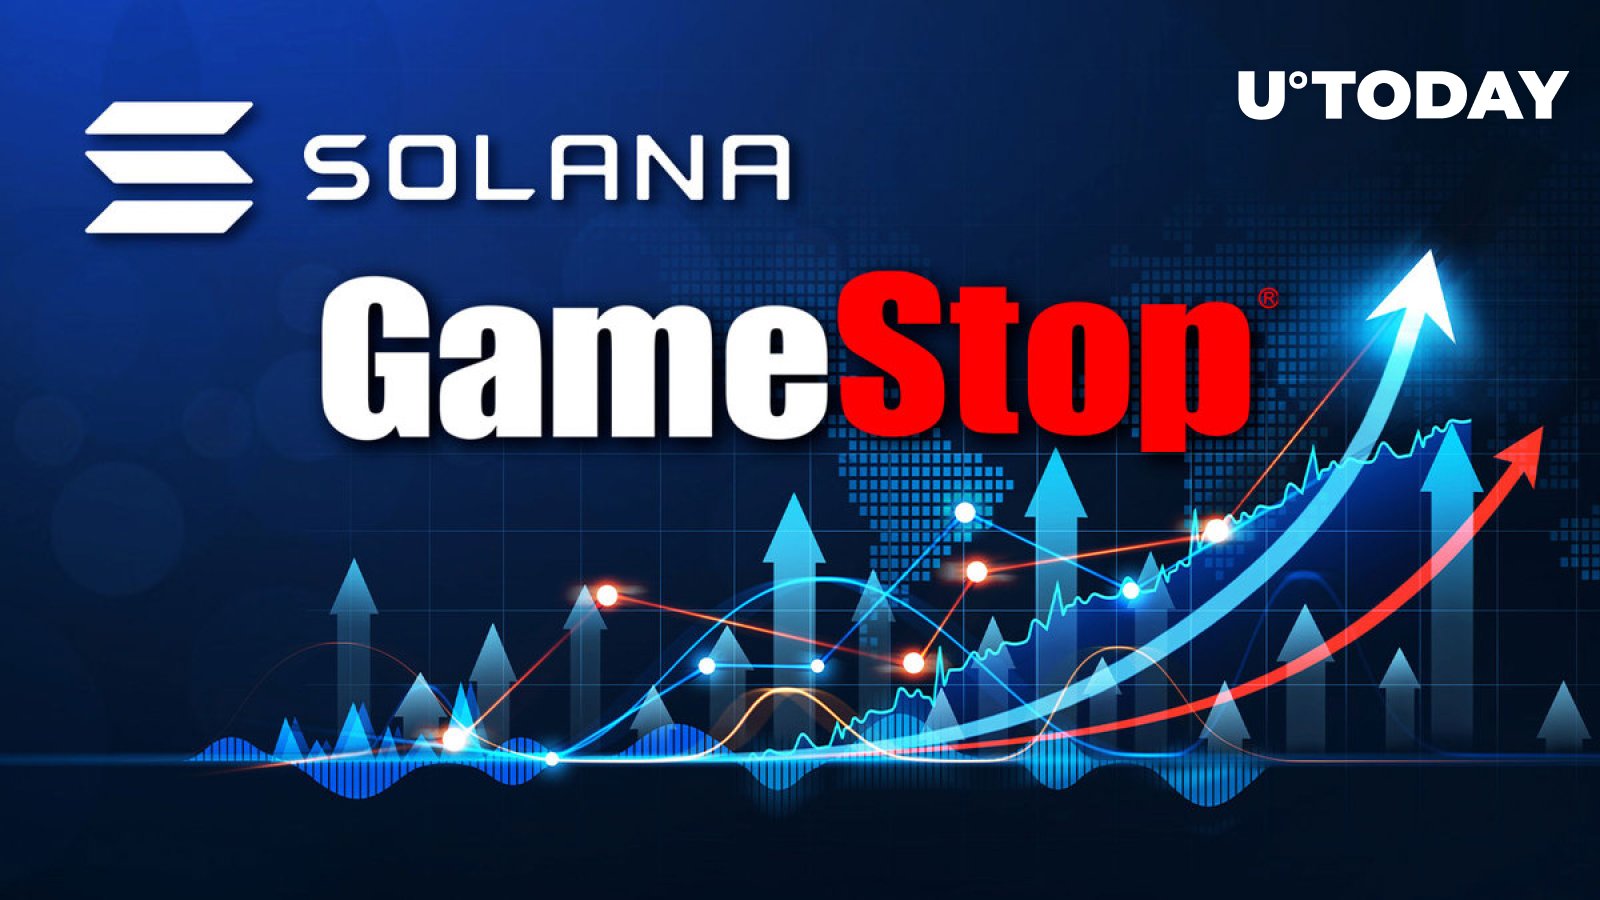 Solana Memecoin GameStop (GME) Jumps 300%, Here’s Reason